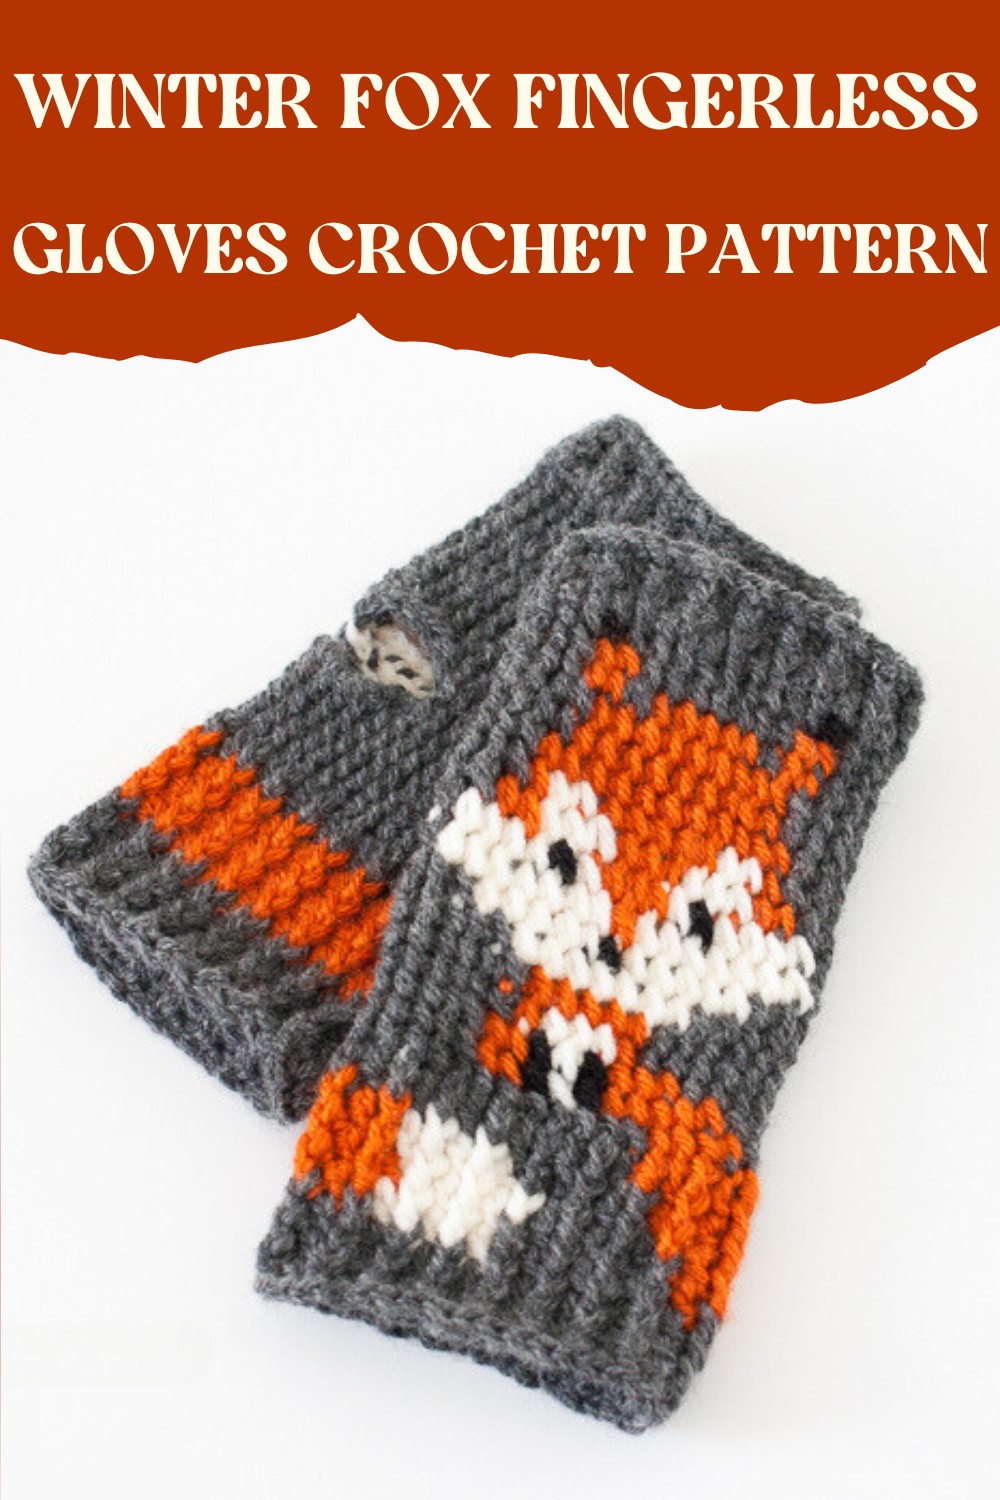 Winter Fox Fingerless Gloves Crochet Pattern